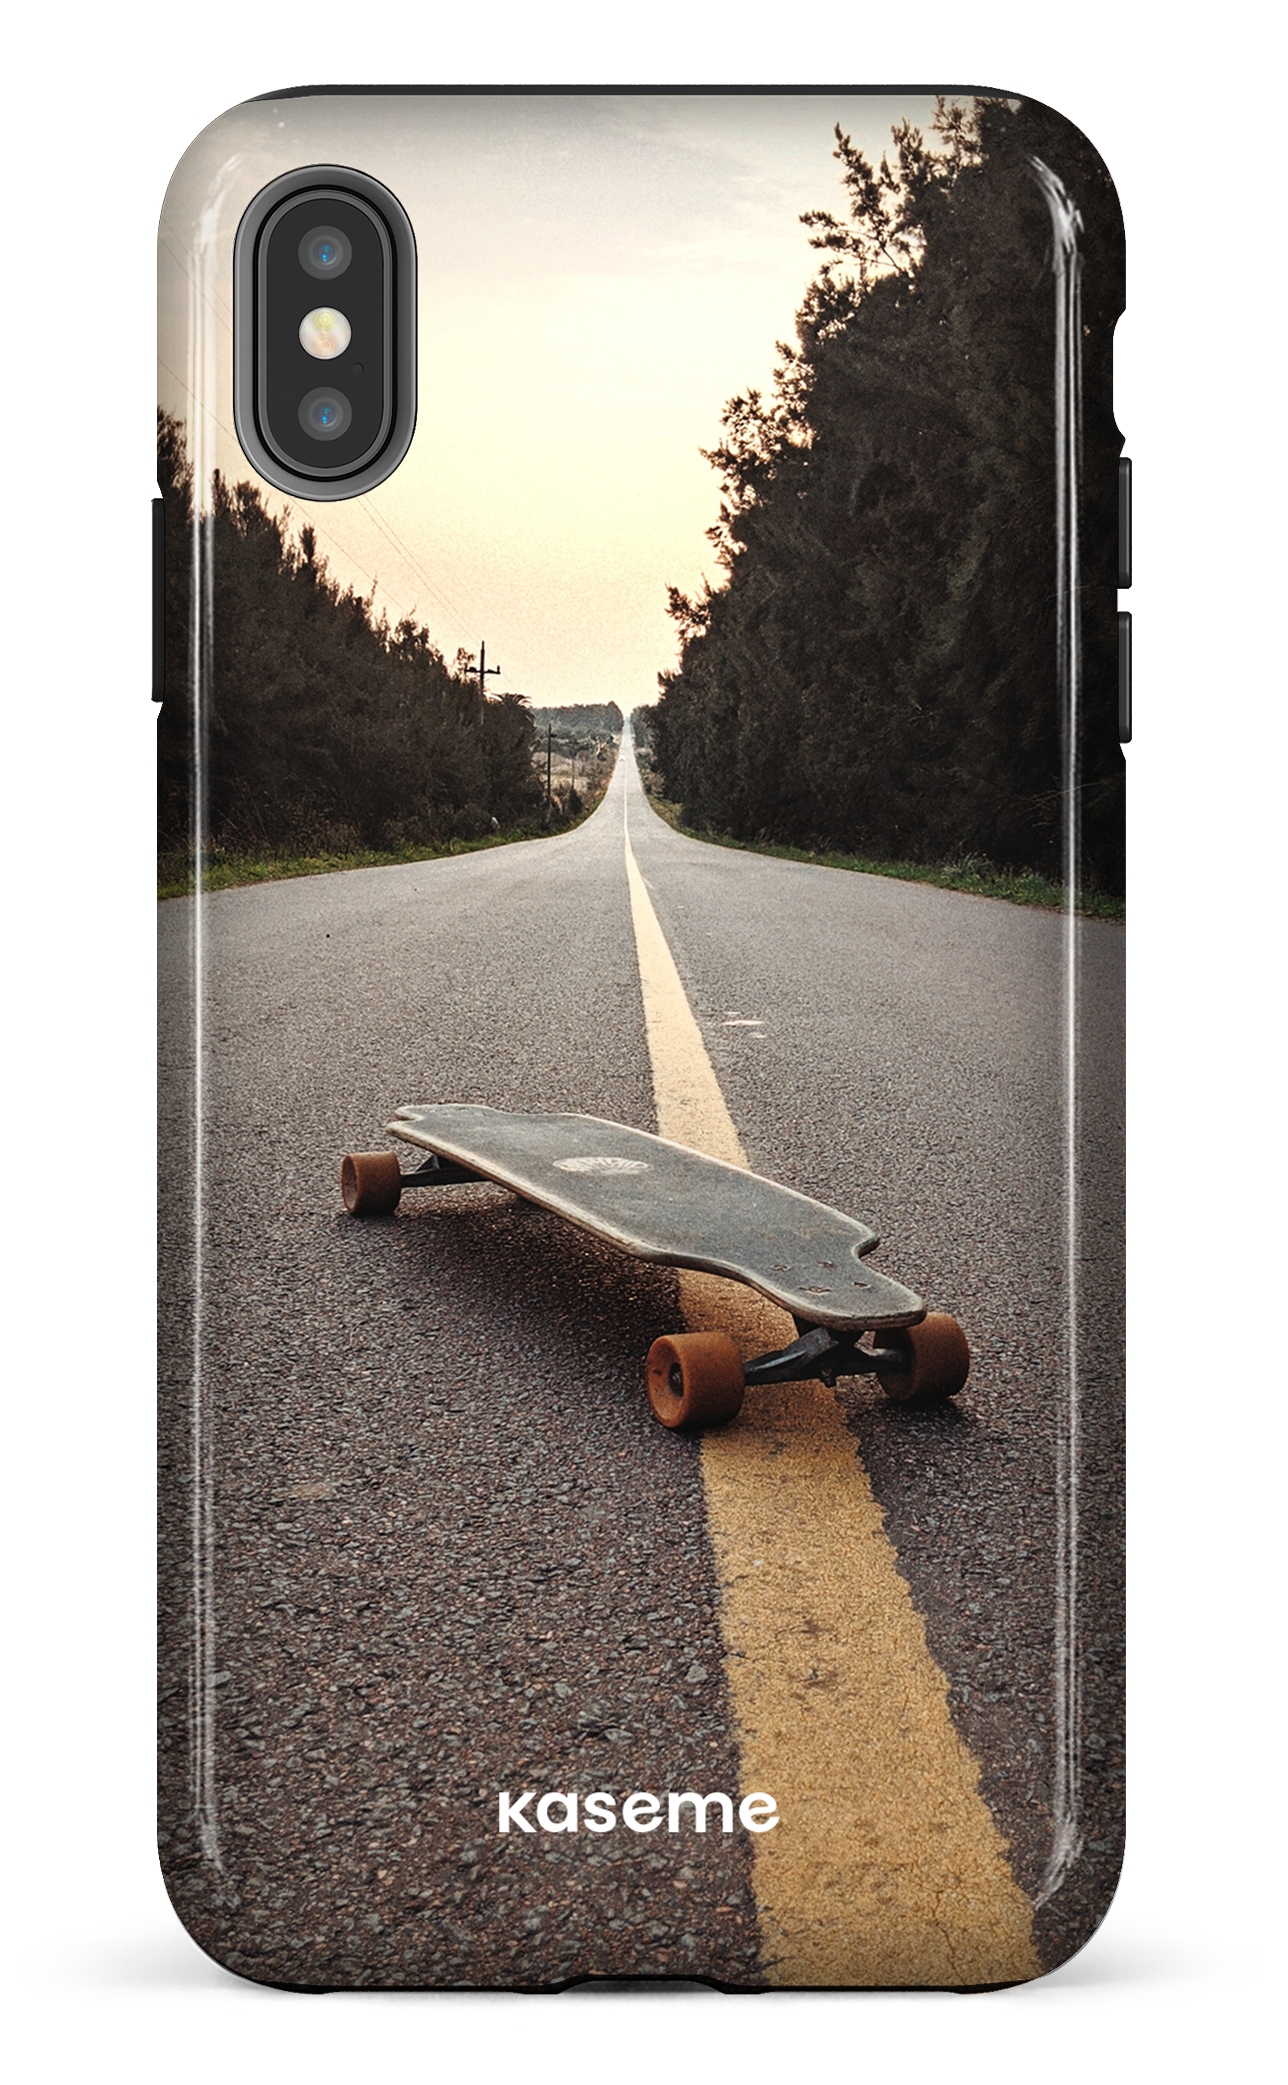 Downhill - iPhone XS Max